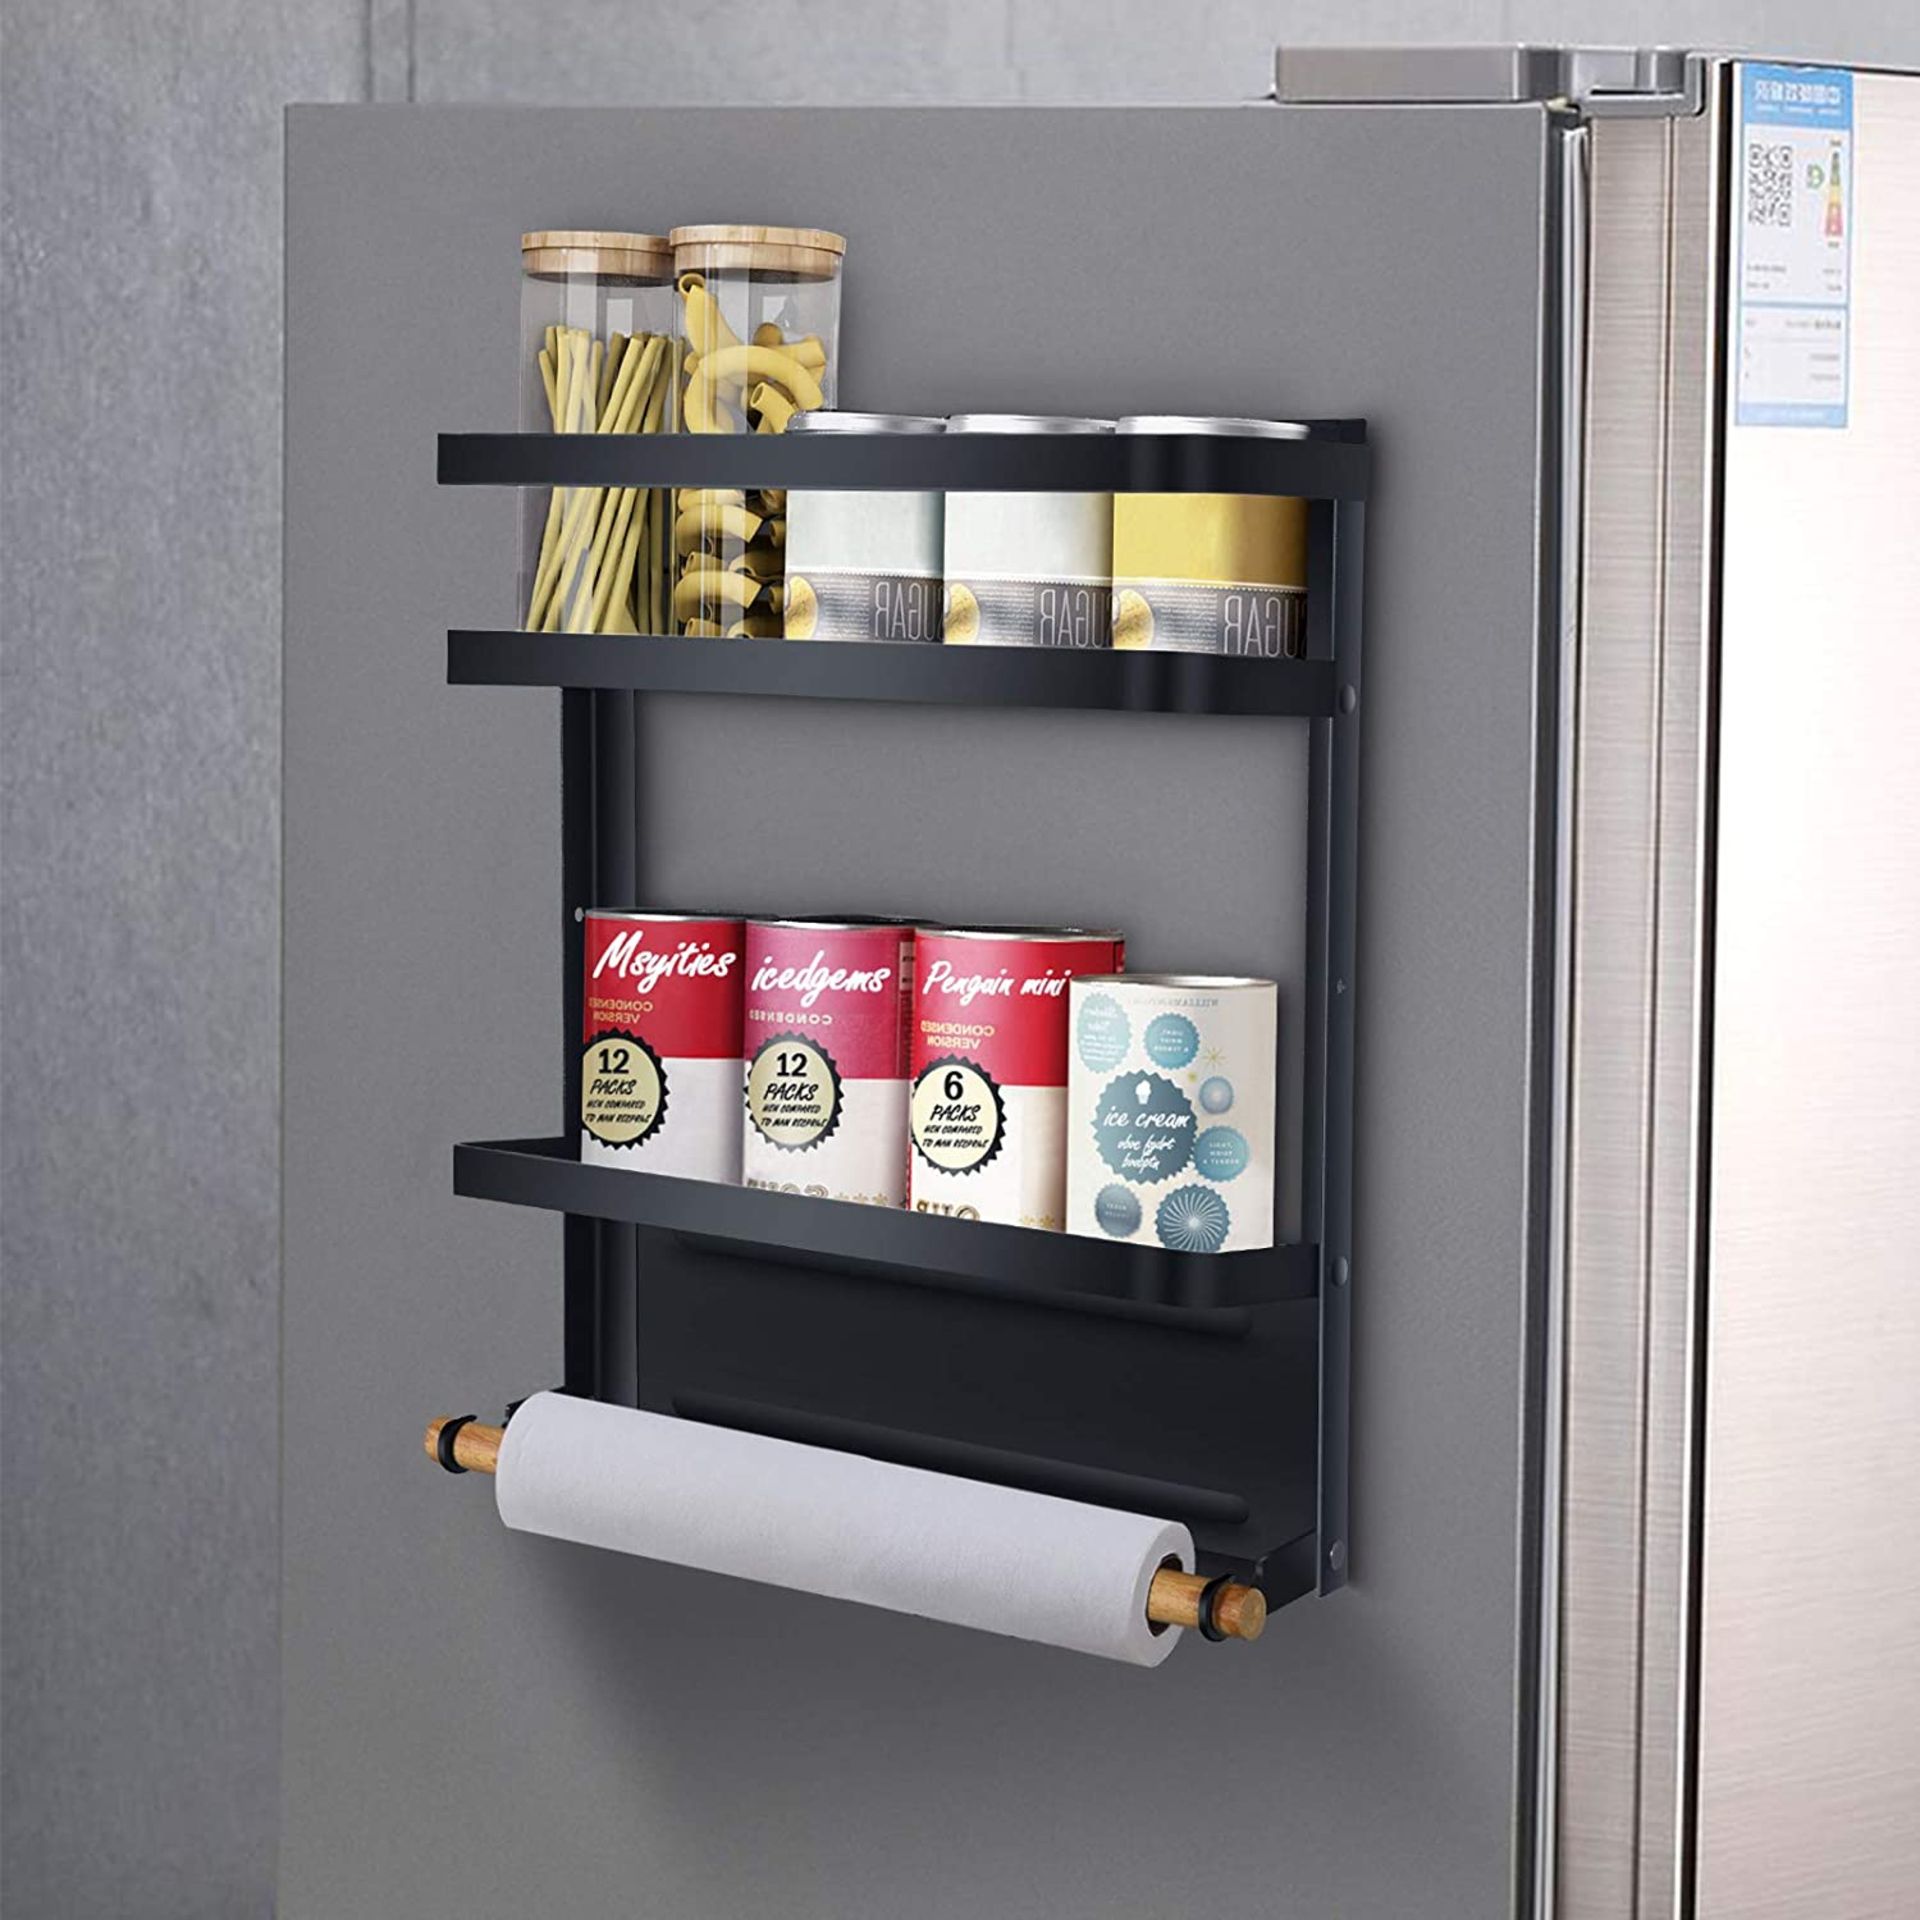 Magnetic Fridge Spice Rack Organiser Rack 2 Tier Refrigerator With Paper Towel Holder RRP £19.99 ea.